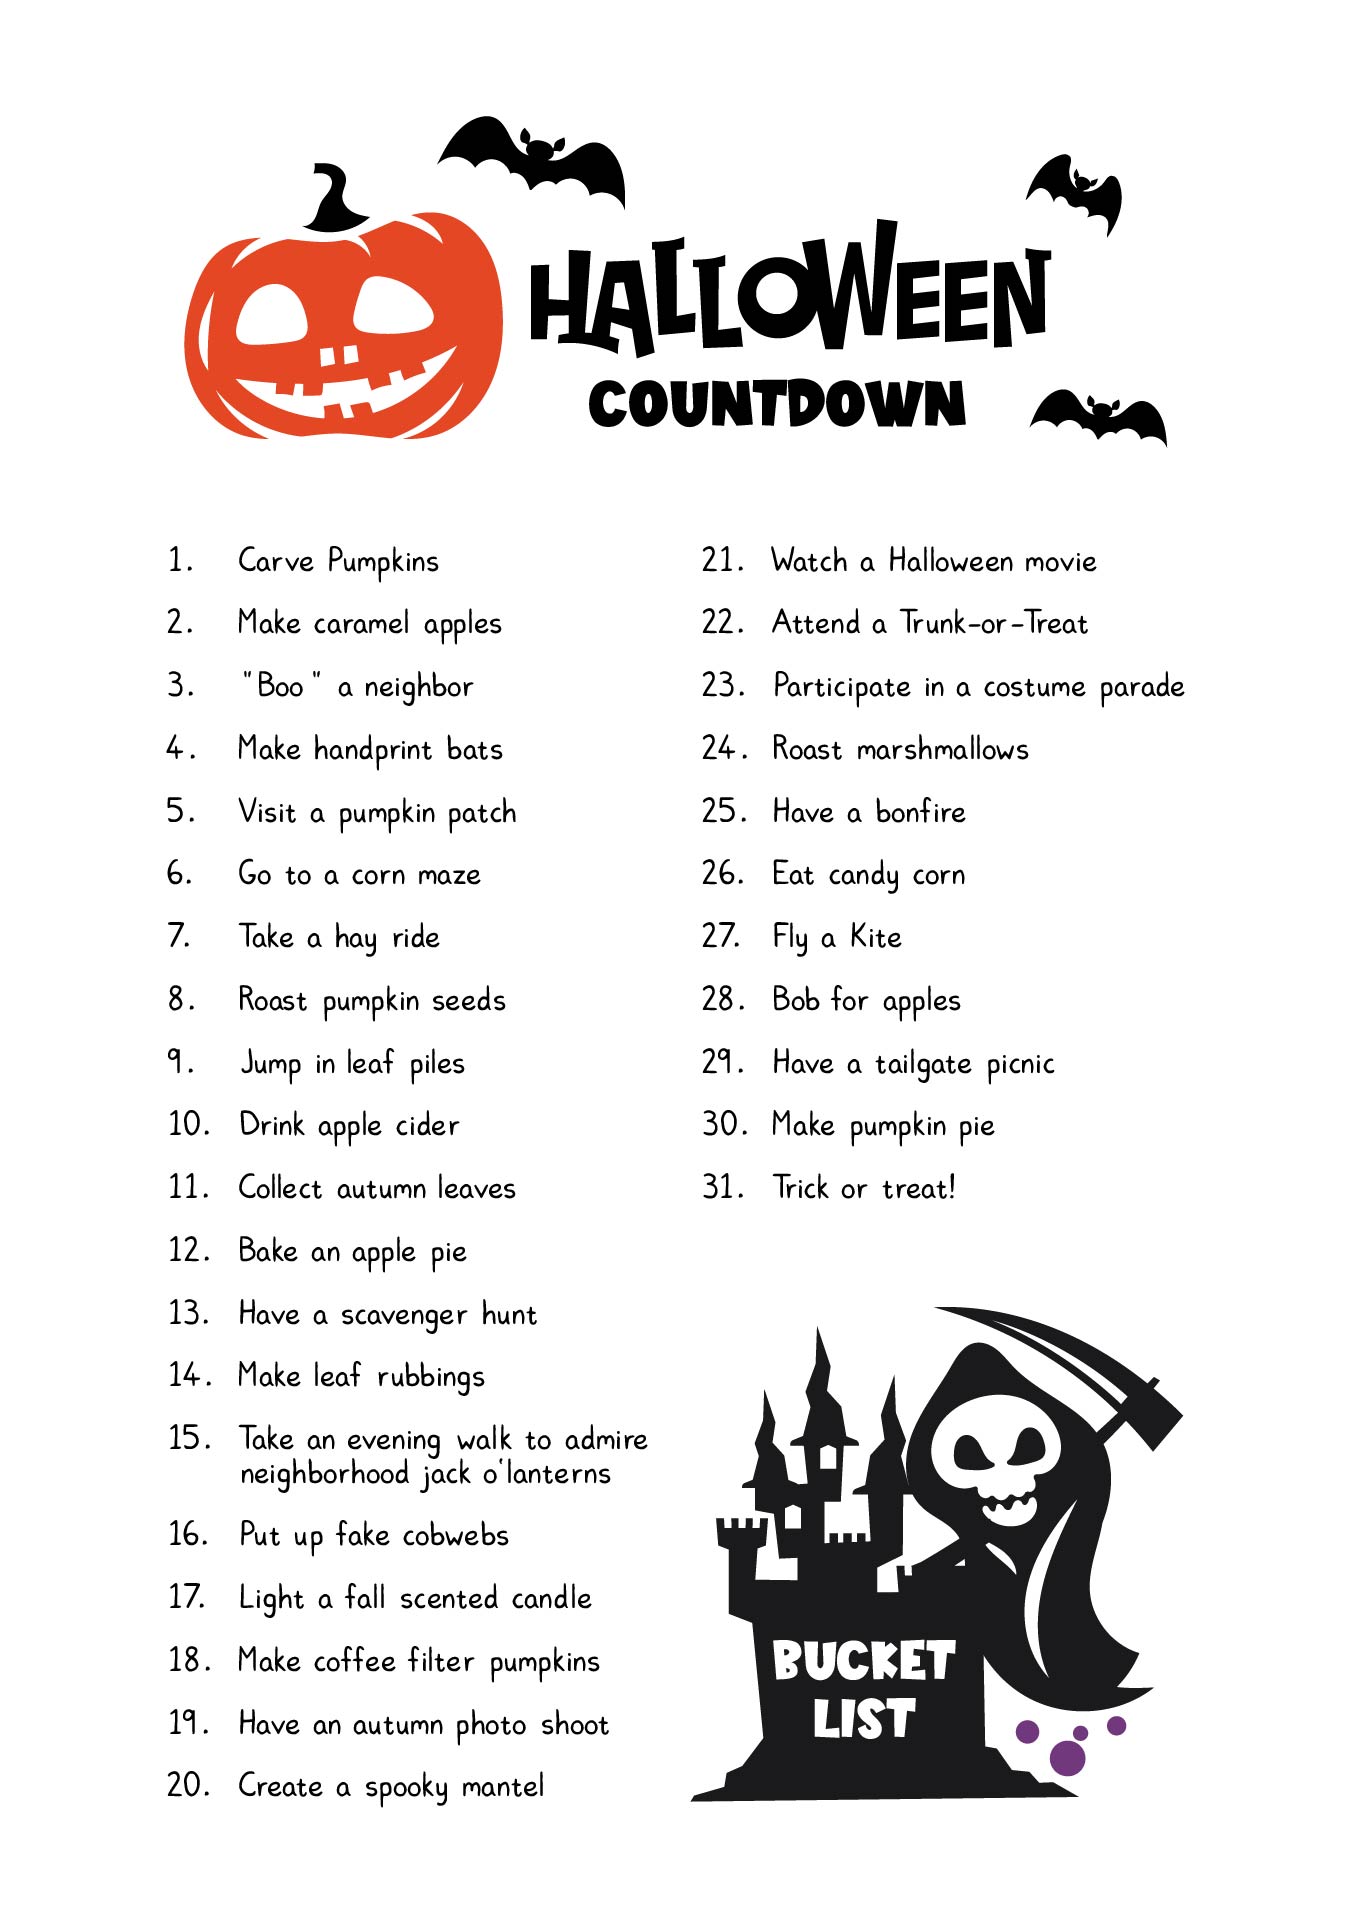 Halloween Countdown Bucket List Printable